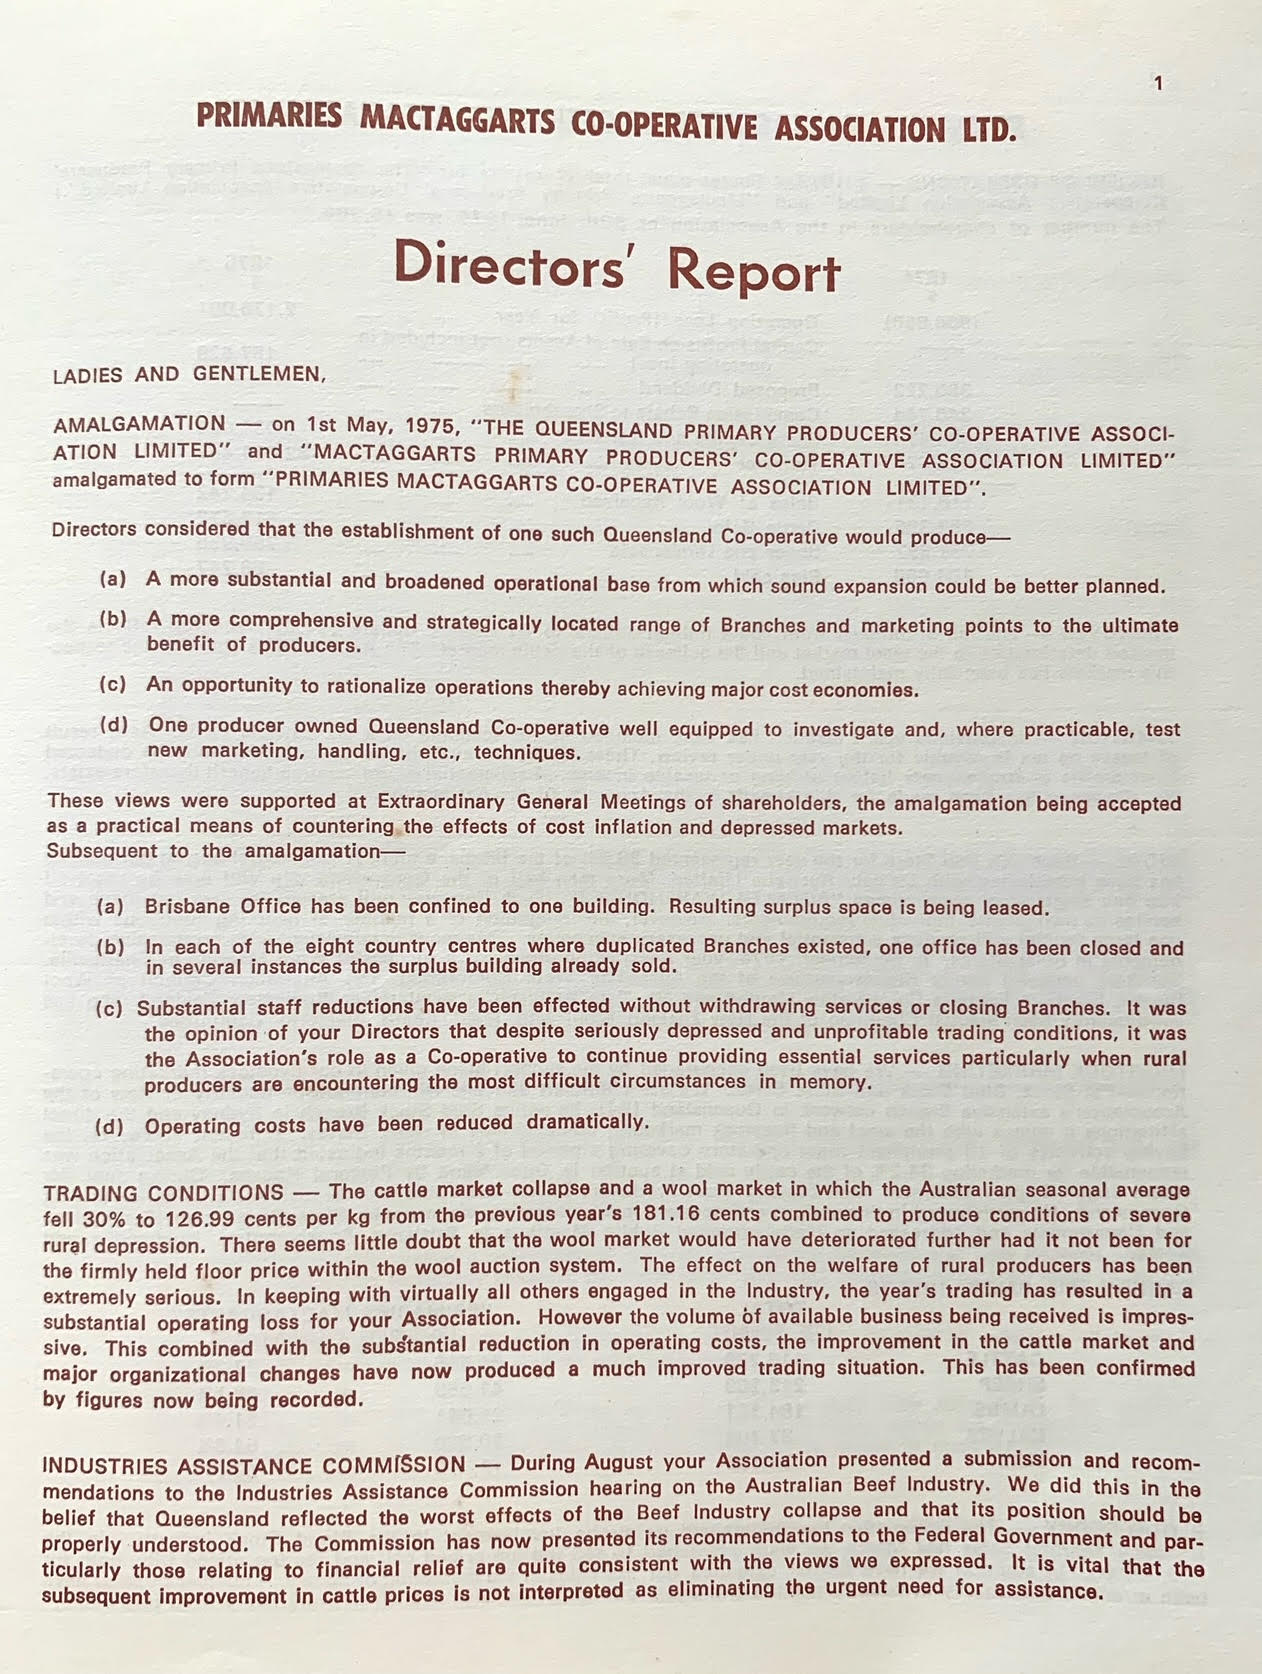 Primac 1975 Annual Report - page 2